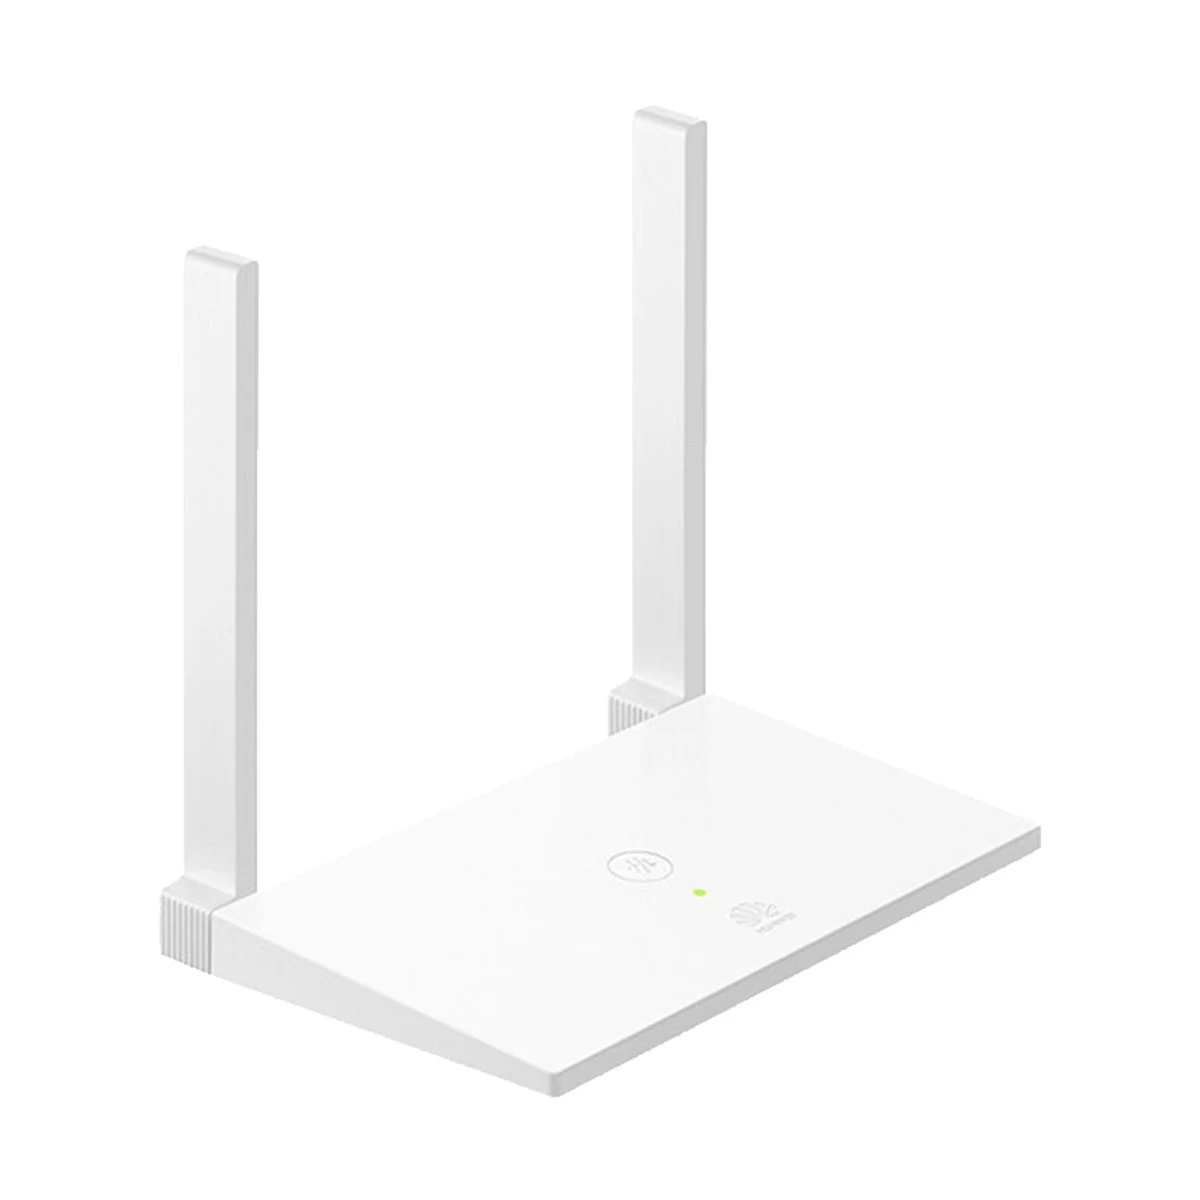 Huawei Access Point, N300, Single Band, White, WS318n